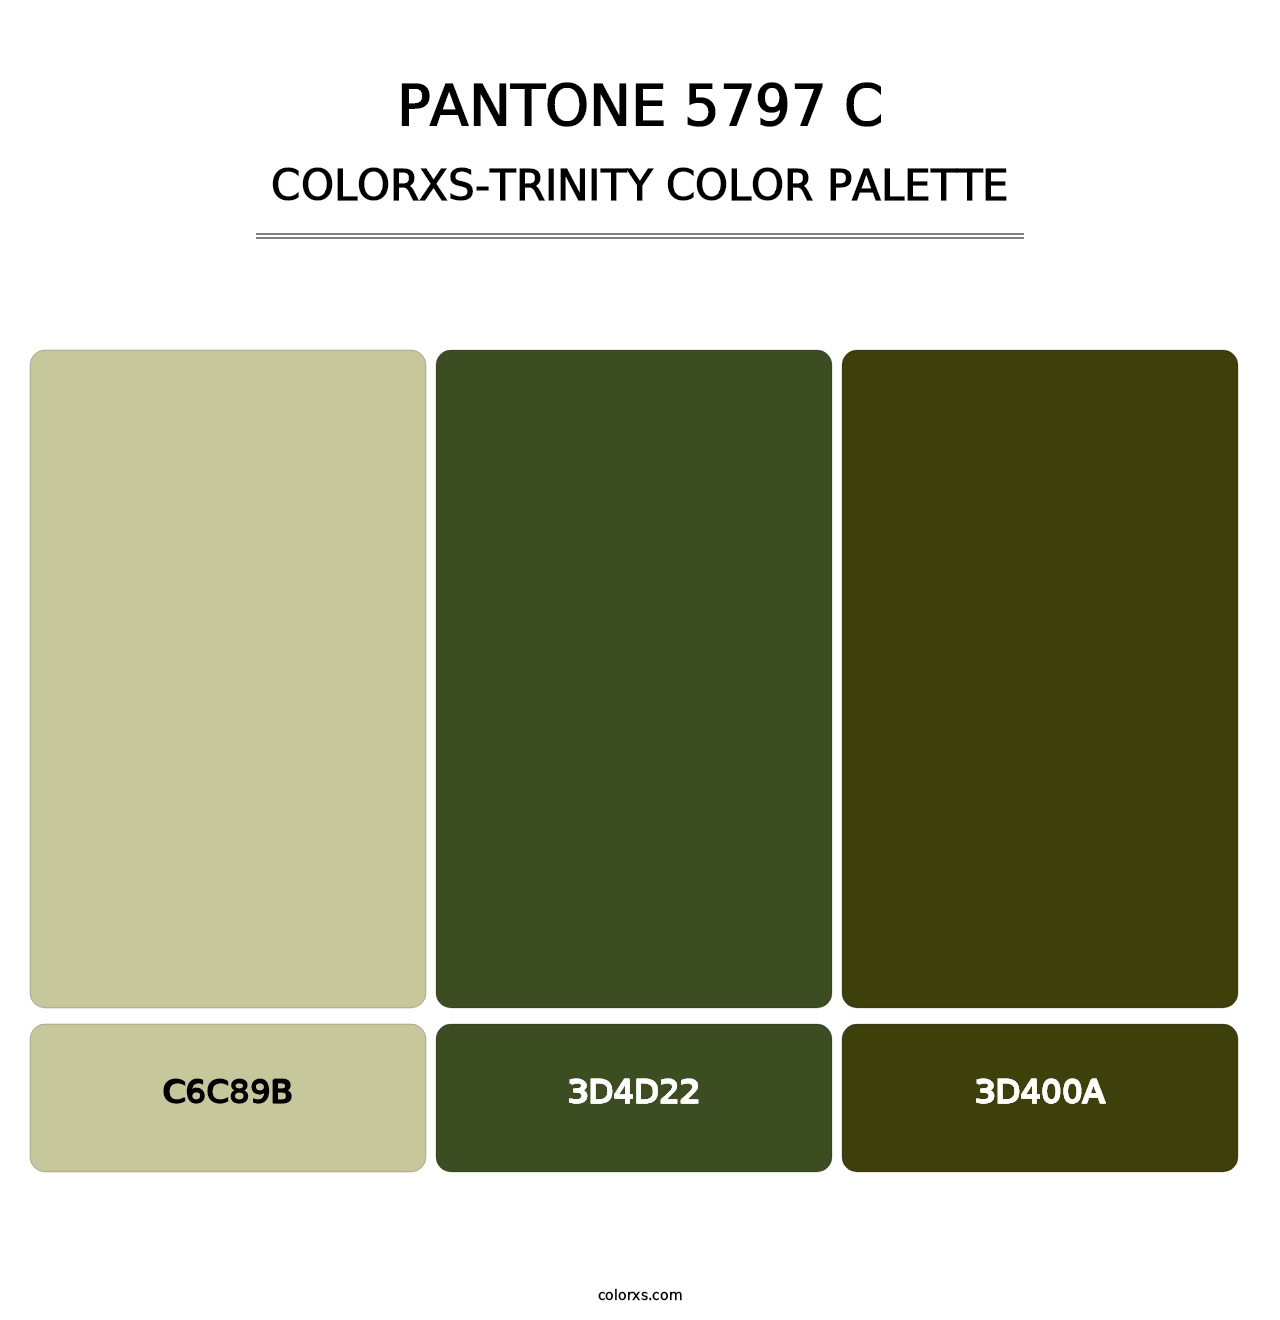 PANTONE 5797 C - Colorxs Trinity Palette